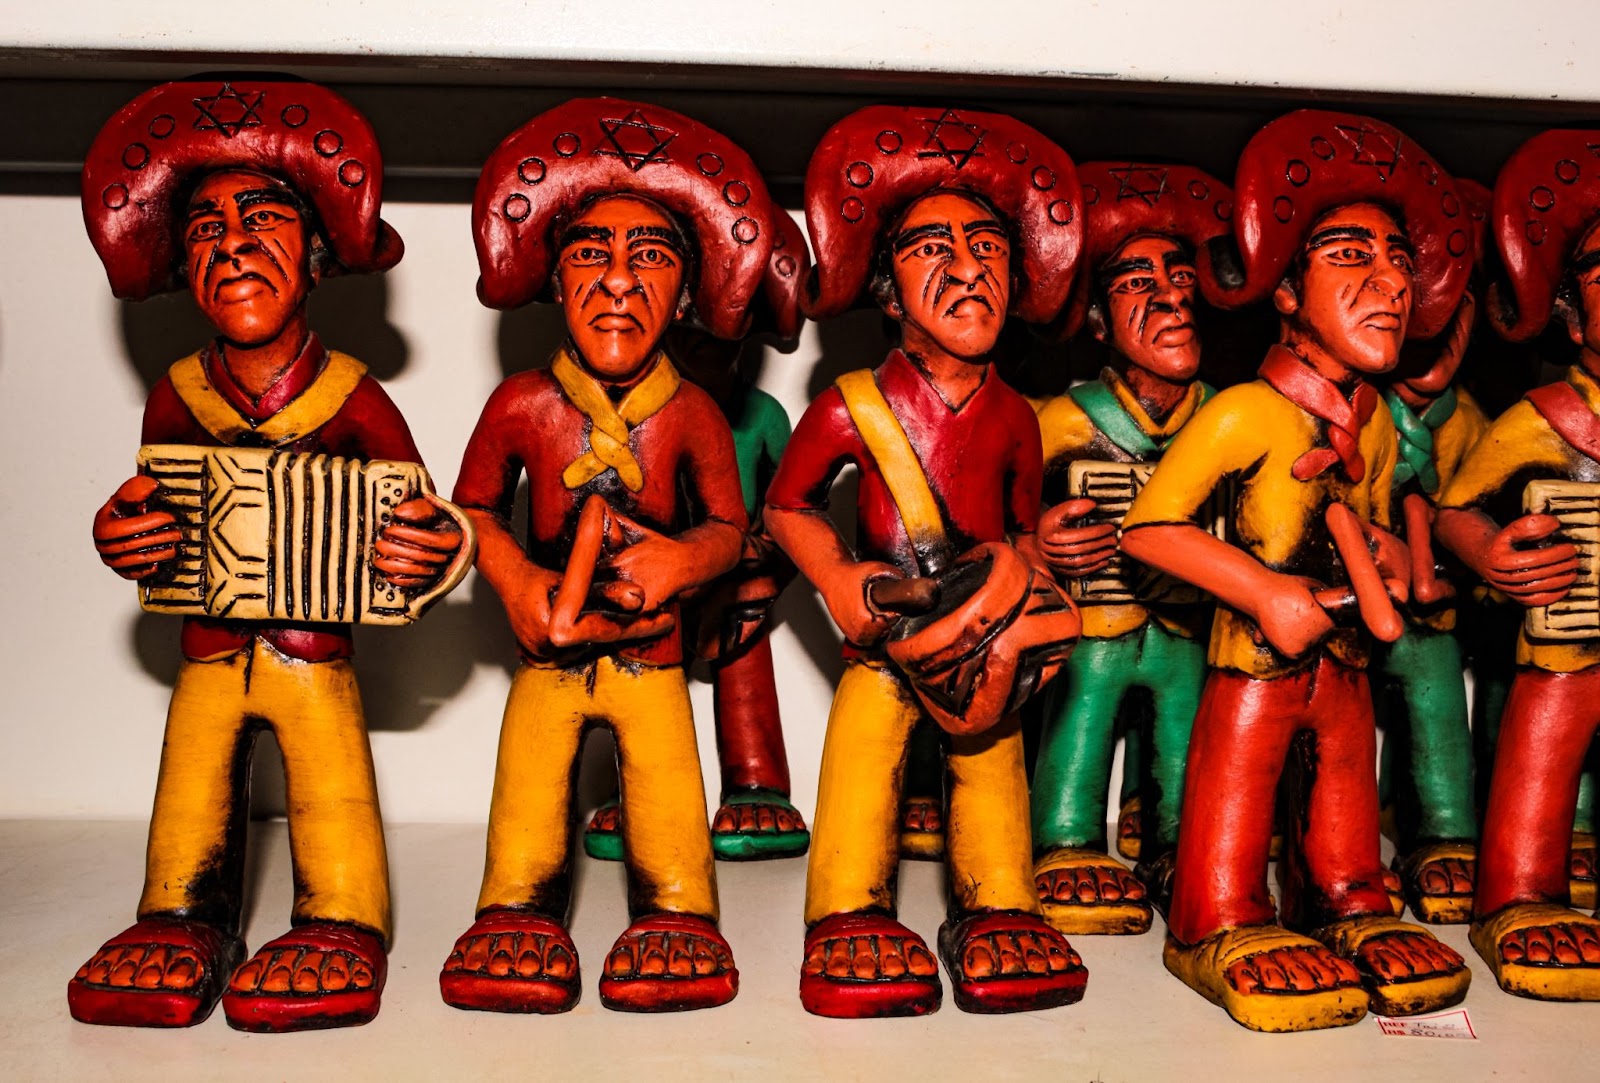 Tradicionais estatuetas de cerâmica, artigos populares nas feiras de artesanato de Fortaleza. As pequenas esculturas representam homens tocando sanfona, triângulo e zabumba.